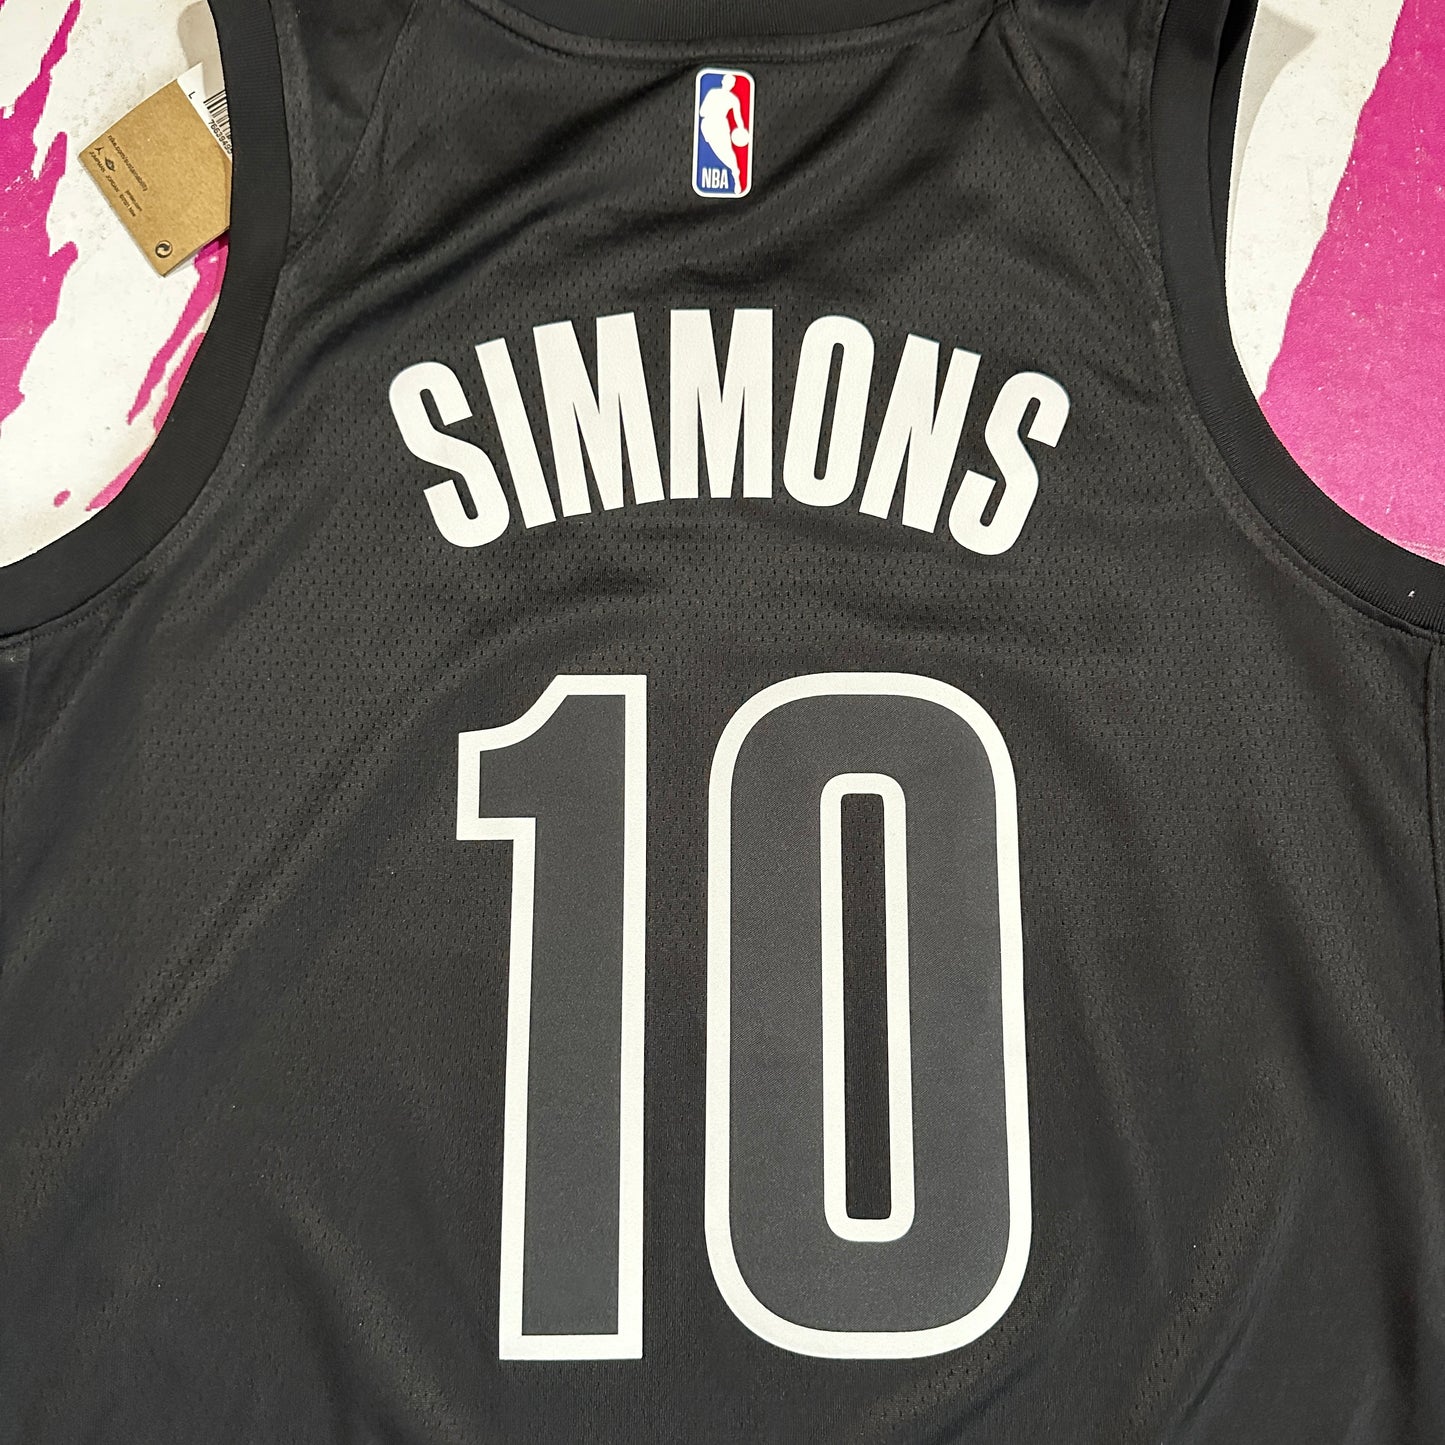 Ben Simmons Brooklyn Nets 22-23 Statement Edition Nike Jersey